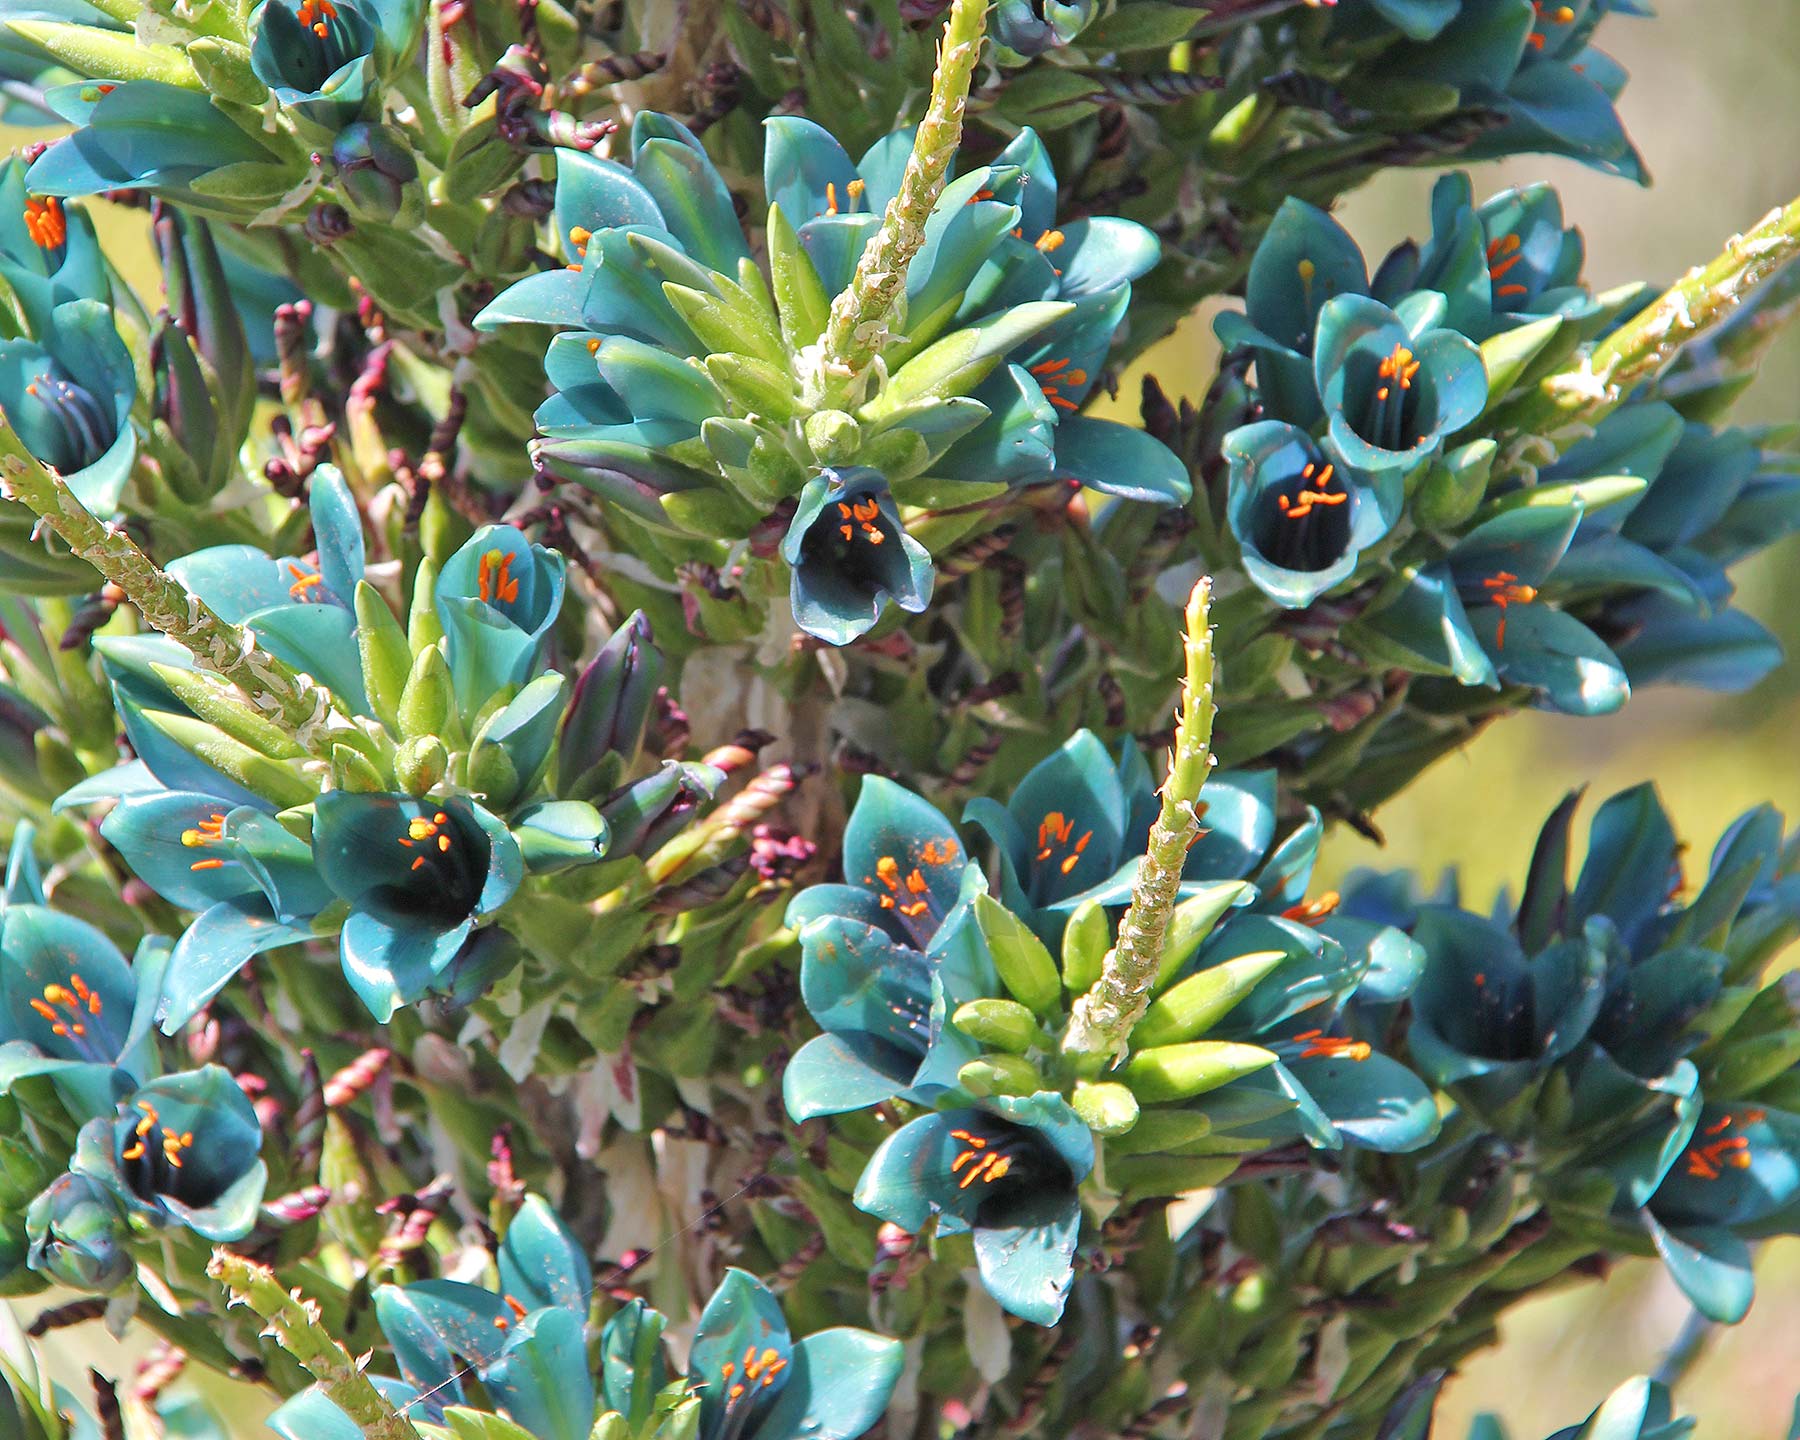 Puya berteroniana - panicle of blue green flowers with bright yellow stamen.